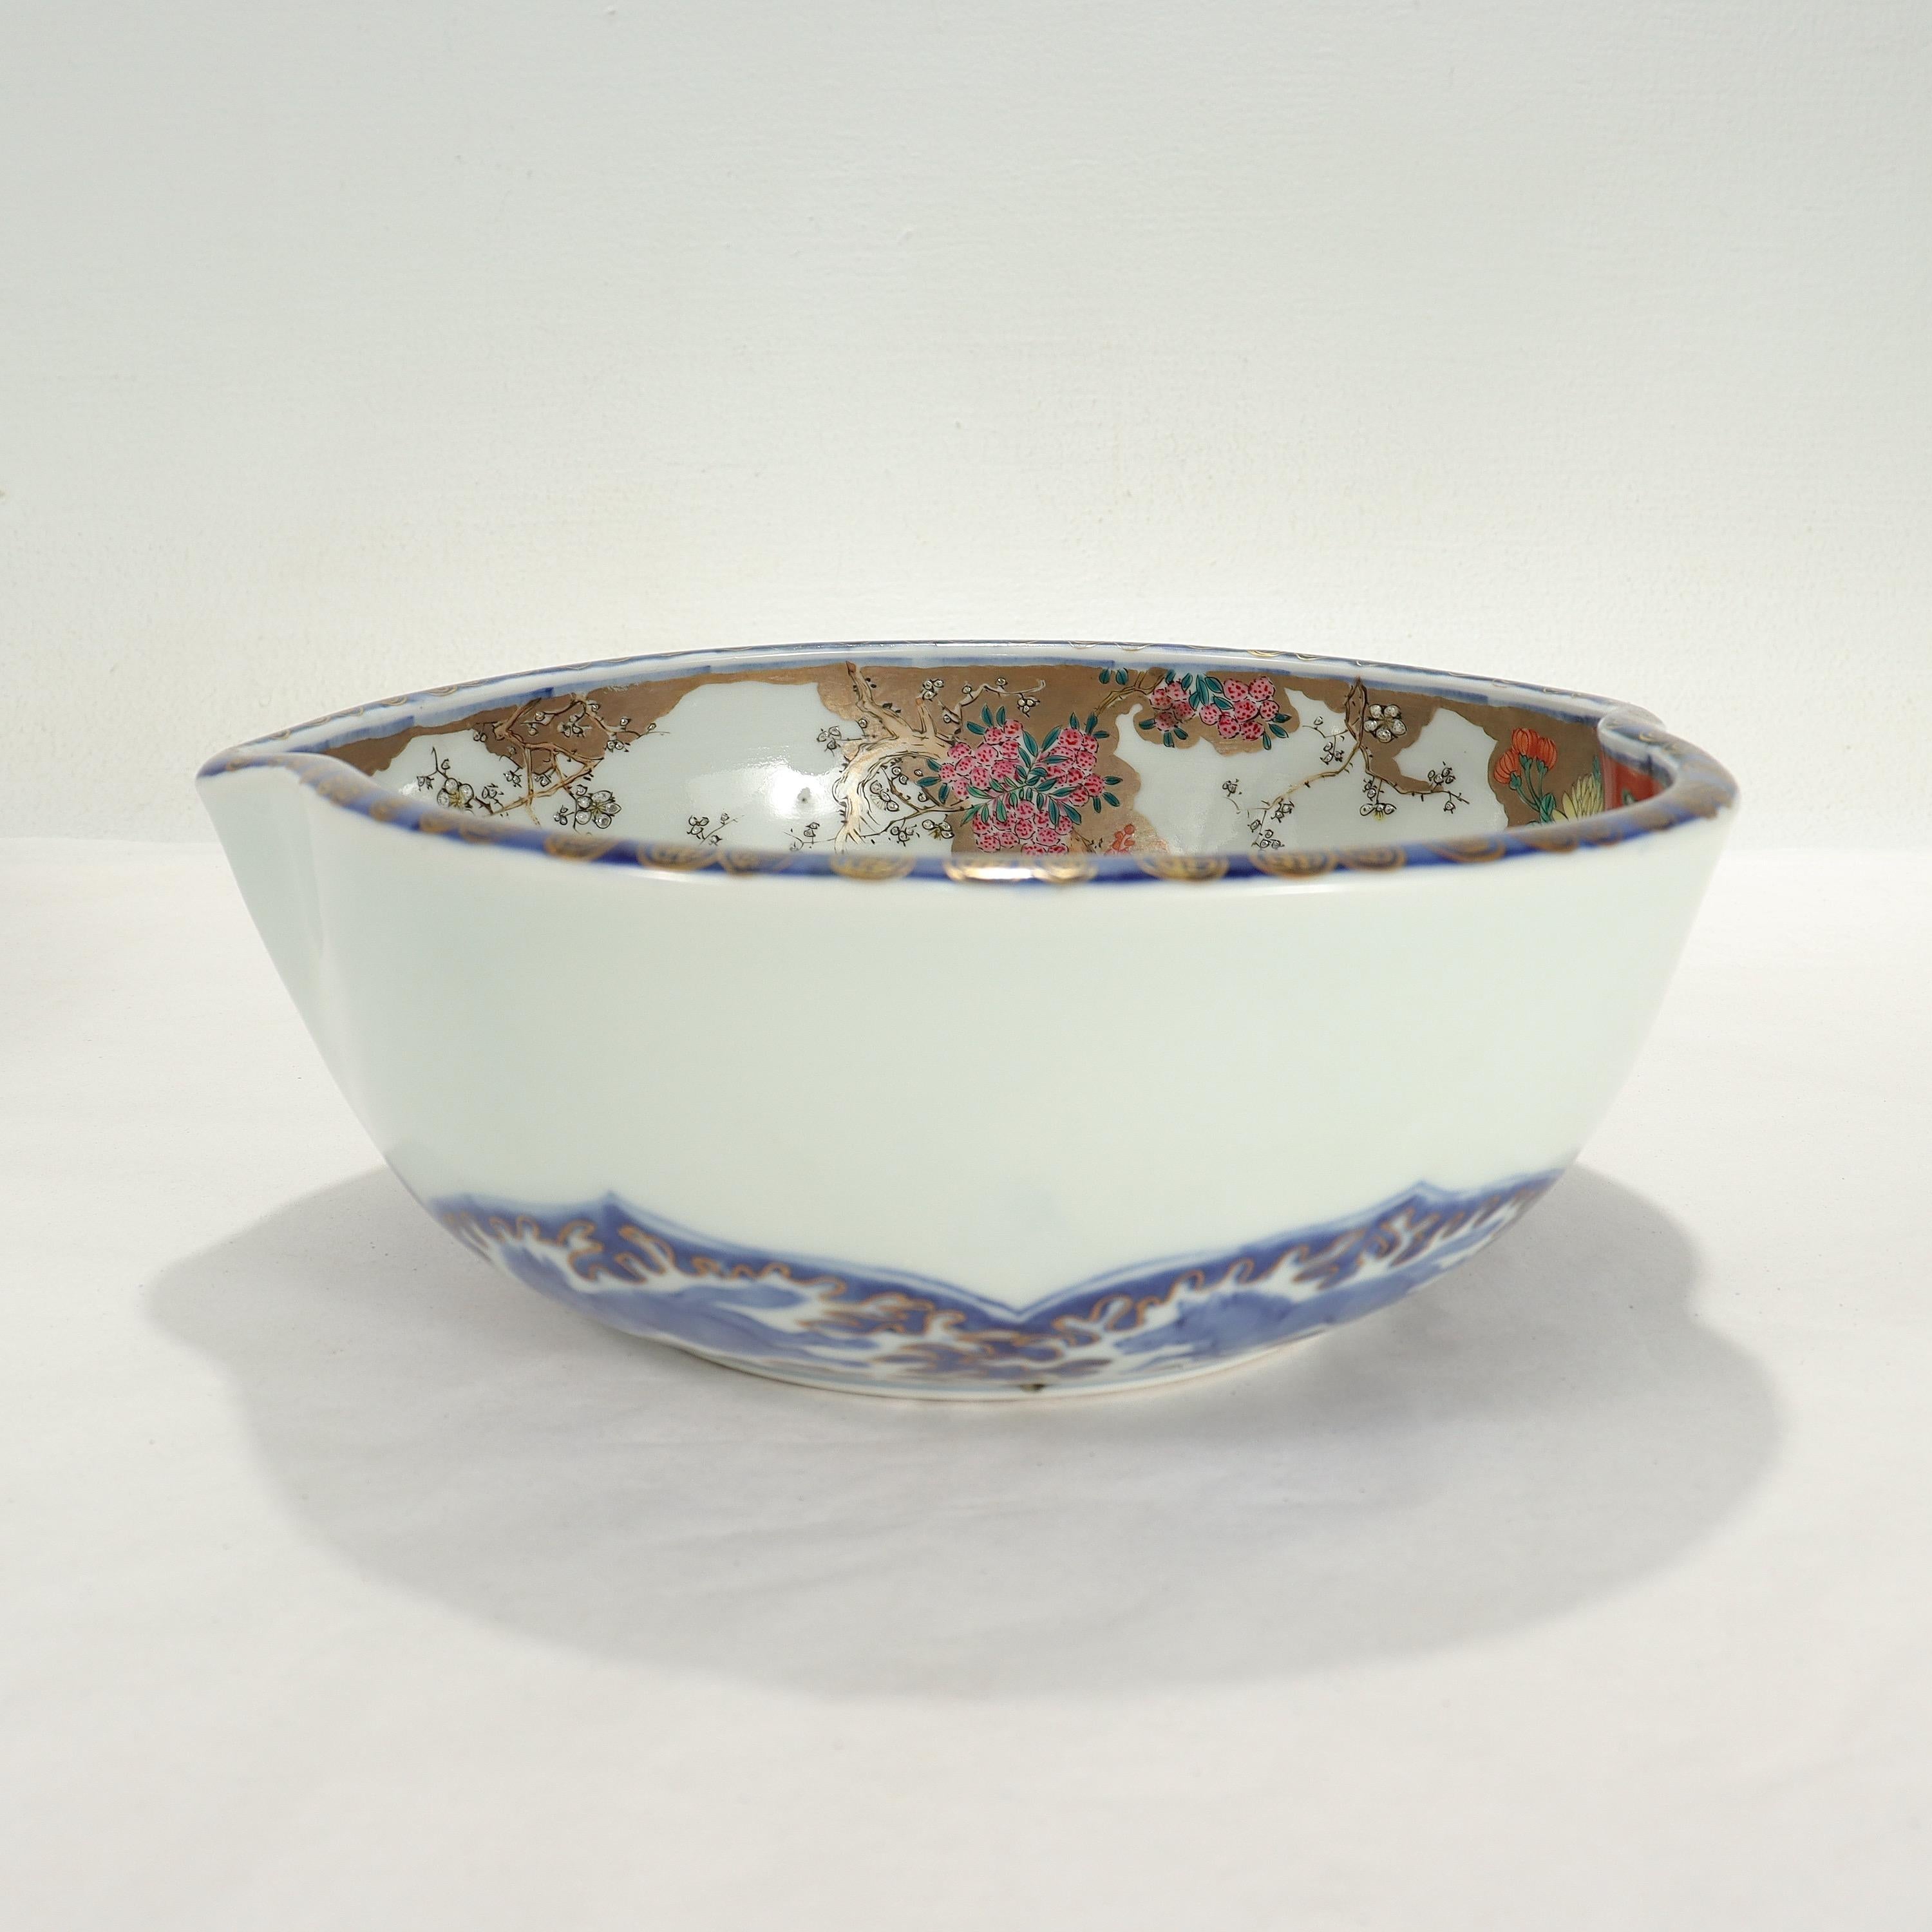 Painted Antique Japanese Signed Imari Porcelain Plum Shaped Bowl by Hichozan Fukagawa For Sale